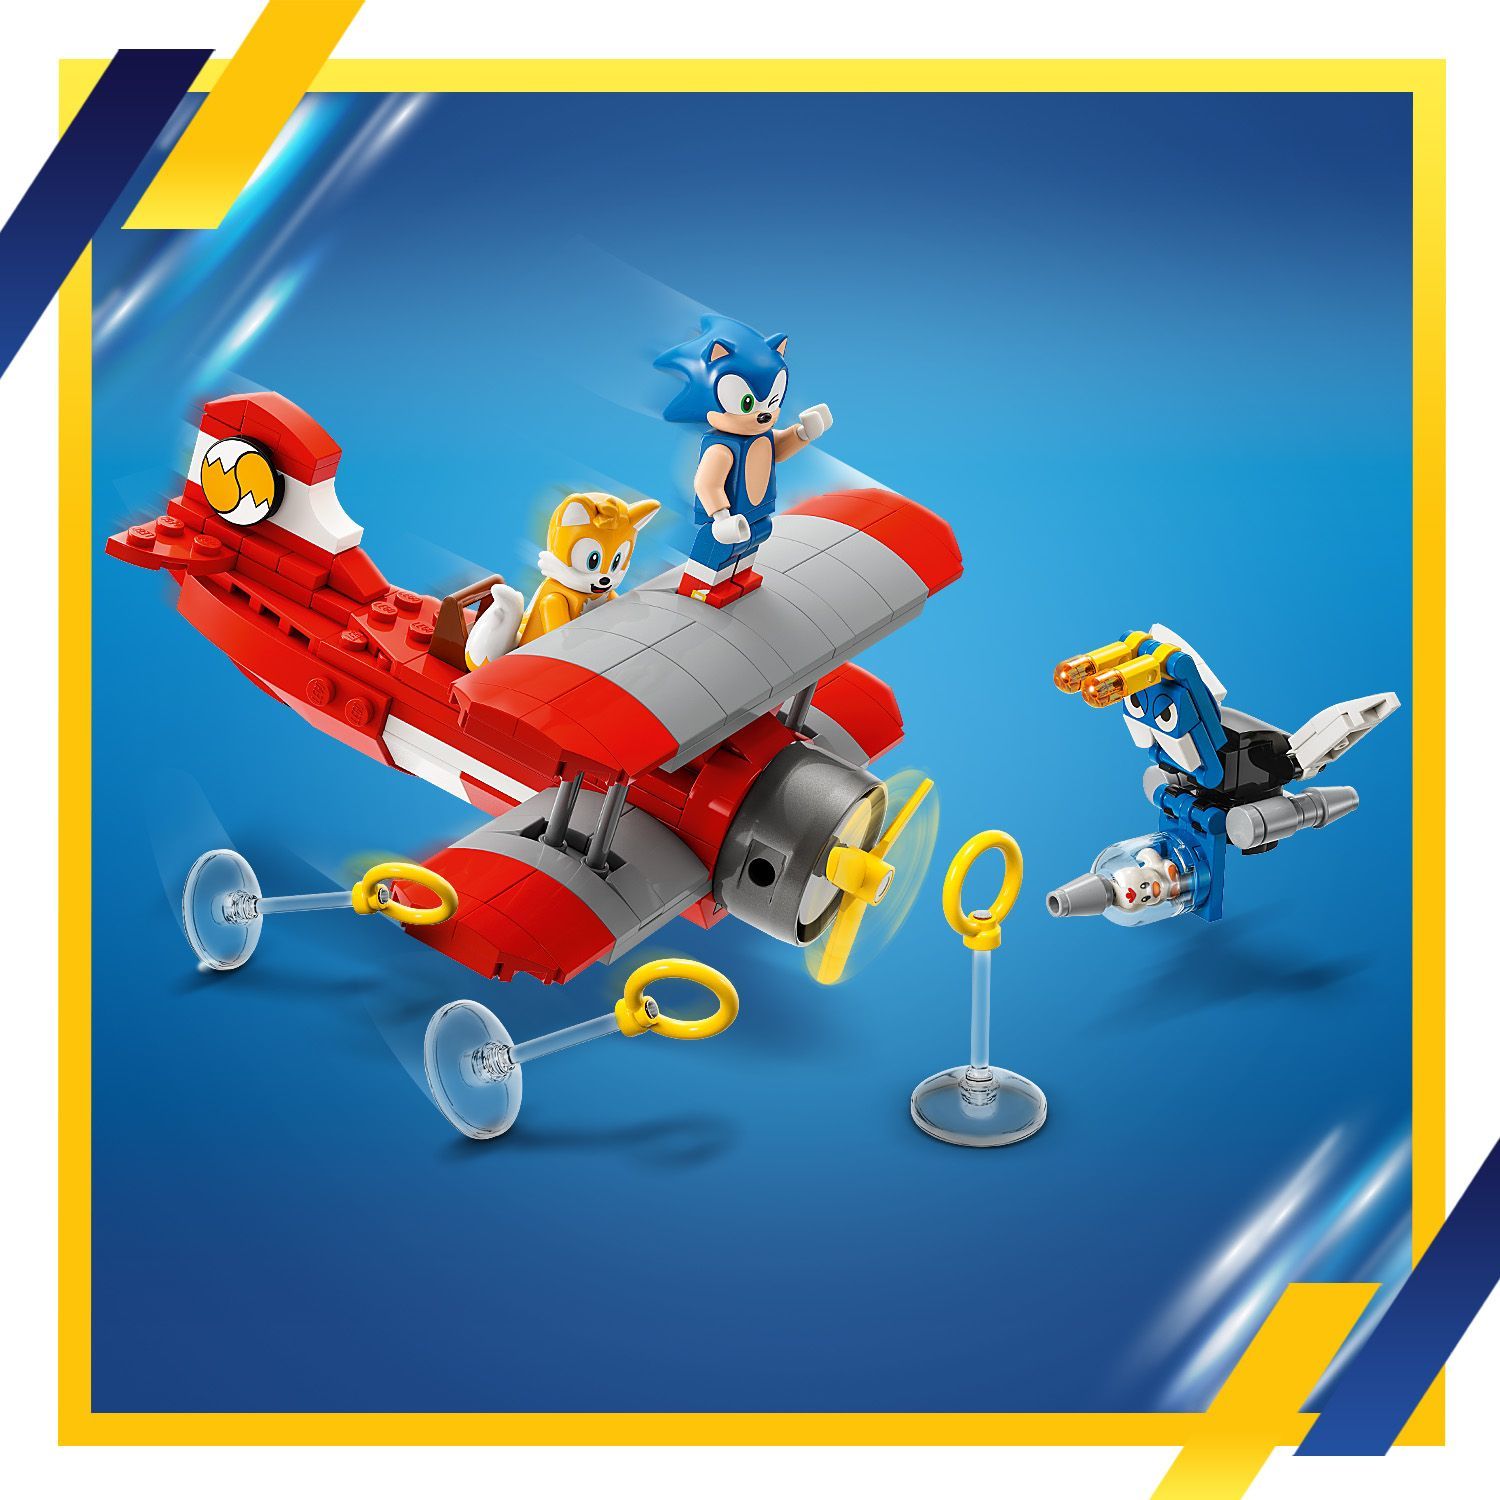 Sonic the Hedgehog™ Keyring 854239, LEGO® Sonic the Hedgehog™